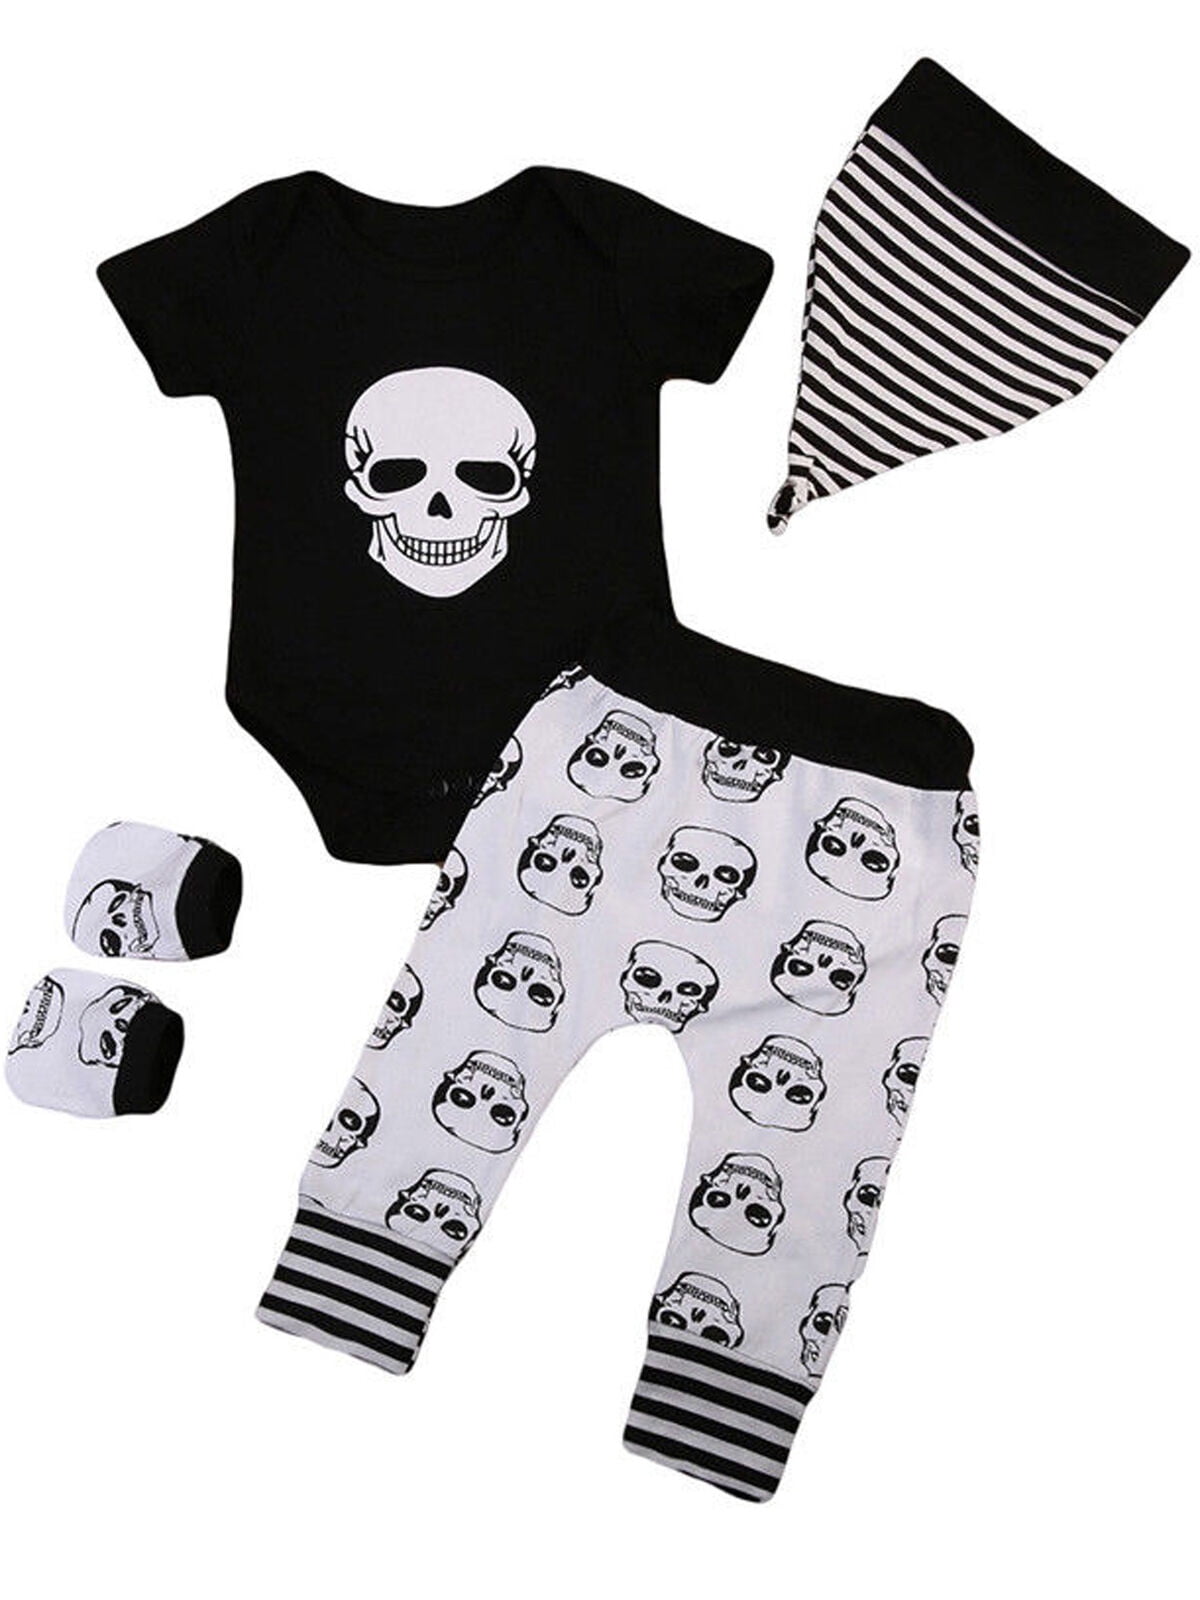 Newborn Kids Baby Boys Print Outfits Clothes Romper Tops+Long Pants+Hat Set 